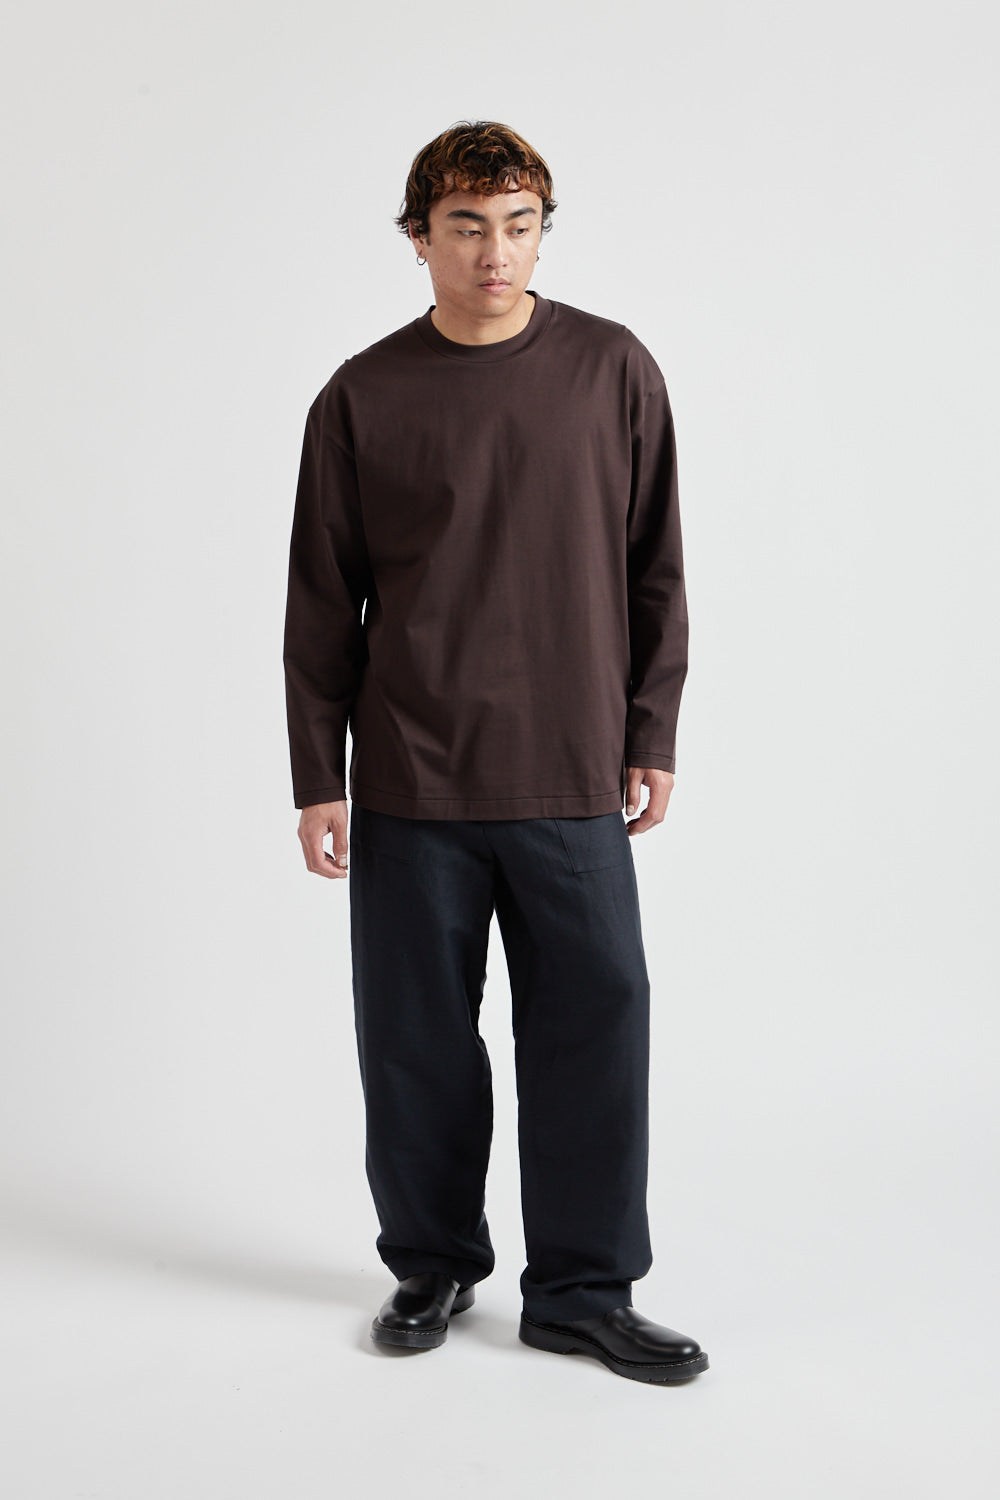 SUVIN 60/2 Oversized Longsleeve T-Shirt - Burgandy